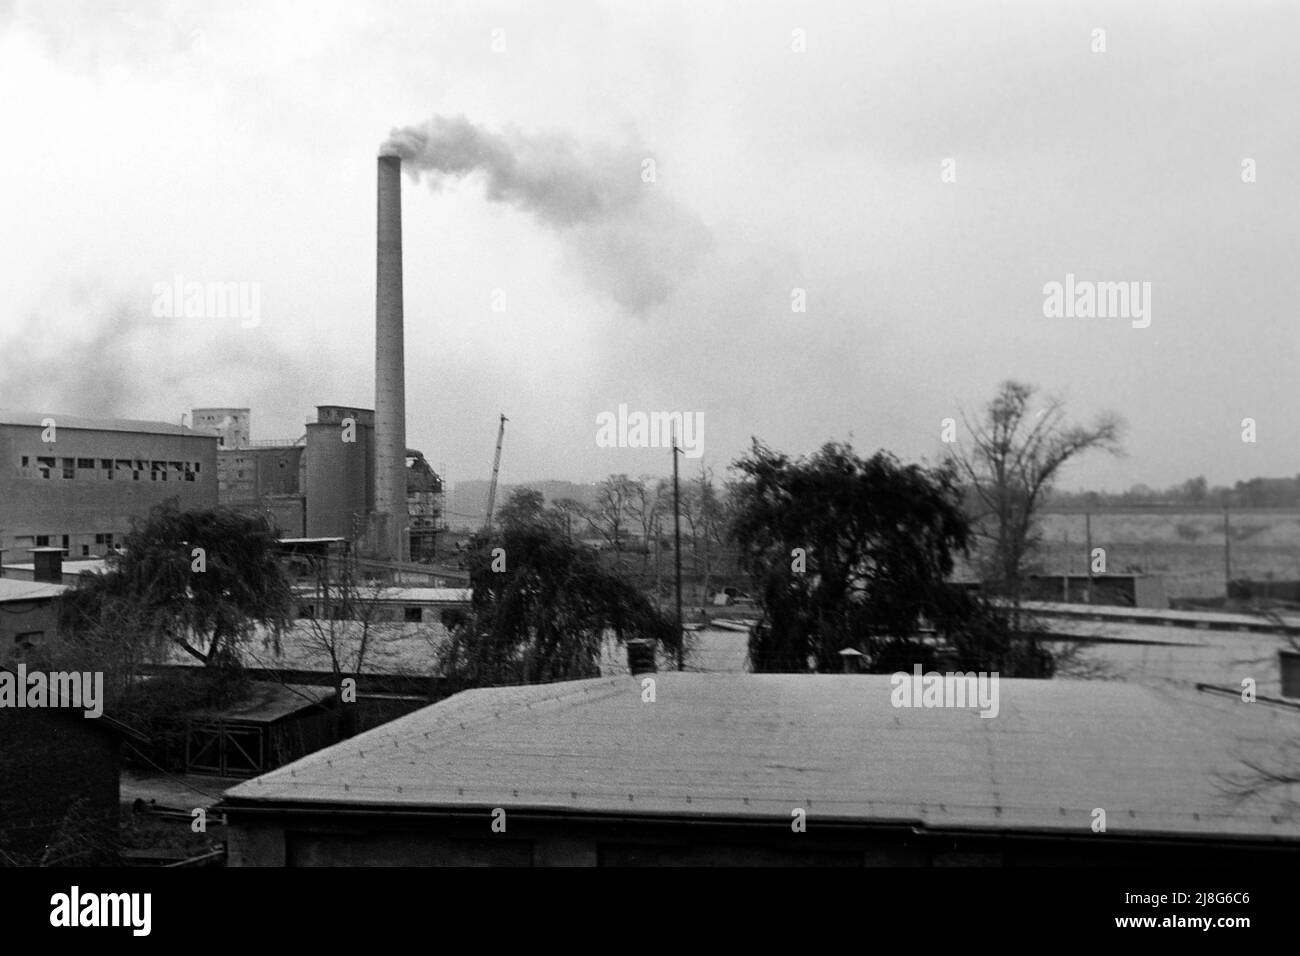 Industrieschornstein in Oppeln, Woiwodschaft Oppeln, 1967. Industrial chimney in Opole, Opole Voivodeship, 1967. Stock Photo